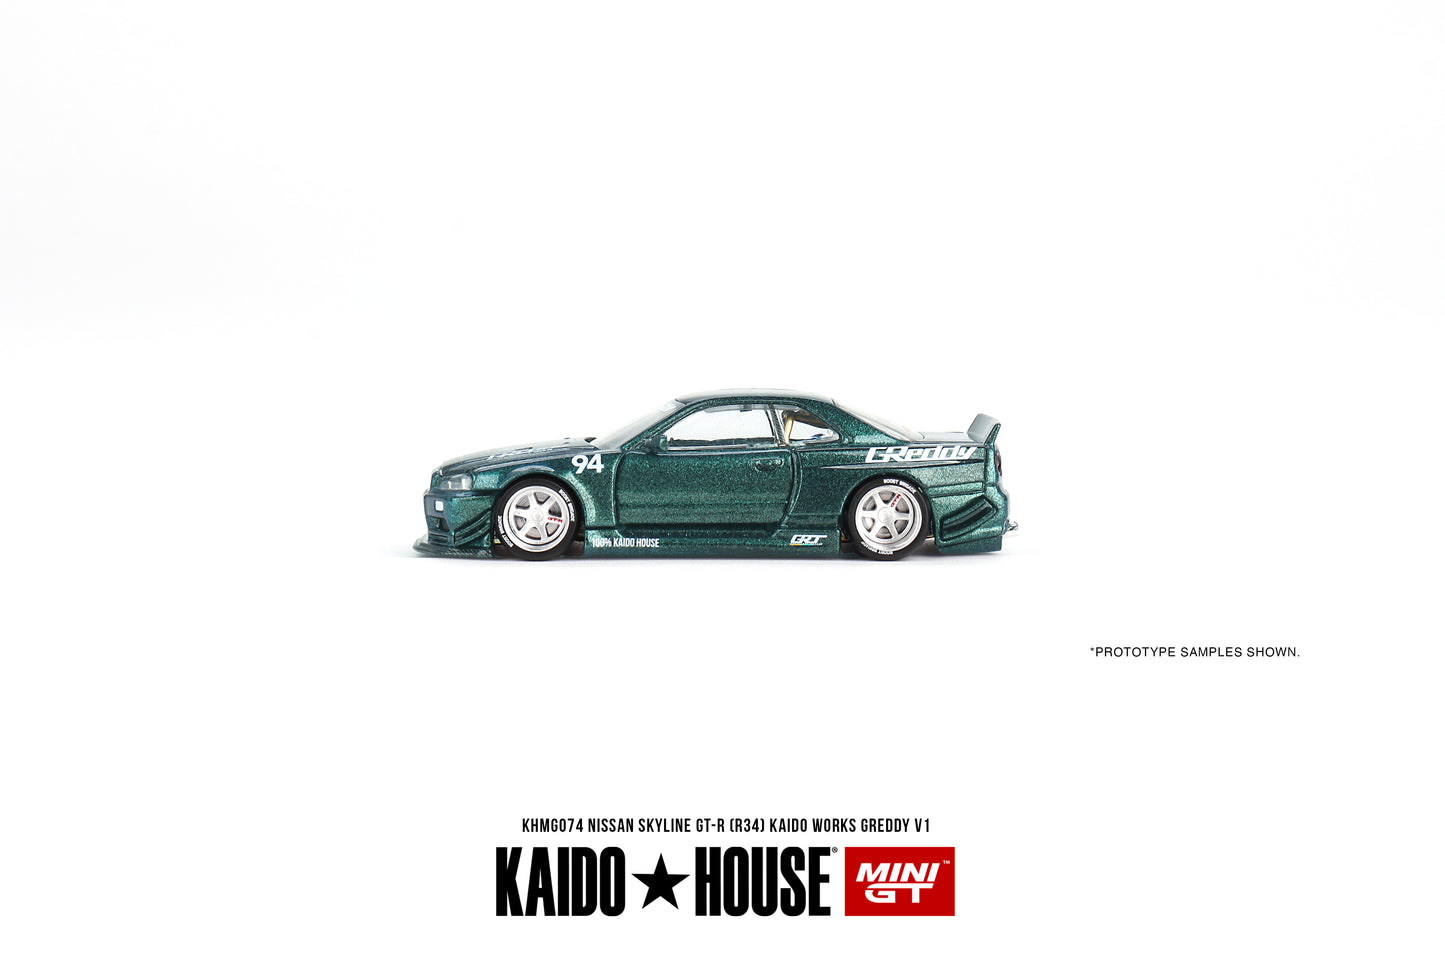 Mini GT Kaido House 074 Nissan Skyline GTR R34 Kaido Works Purple Green 1:64